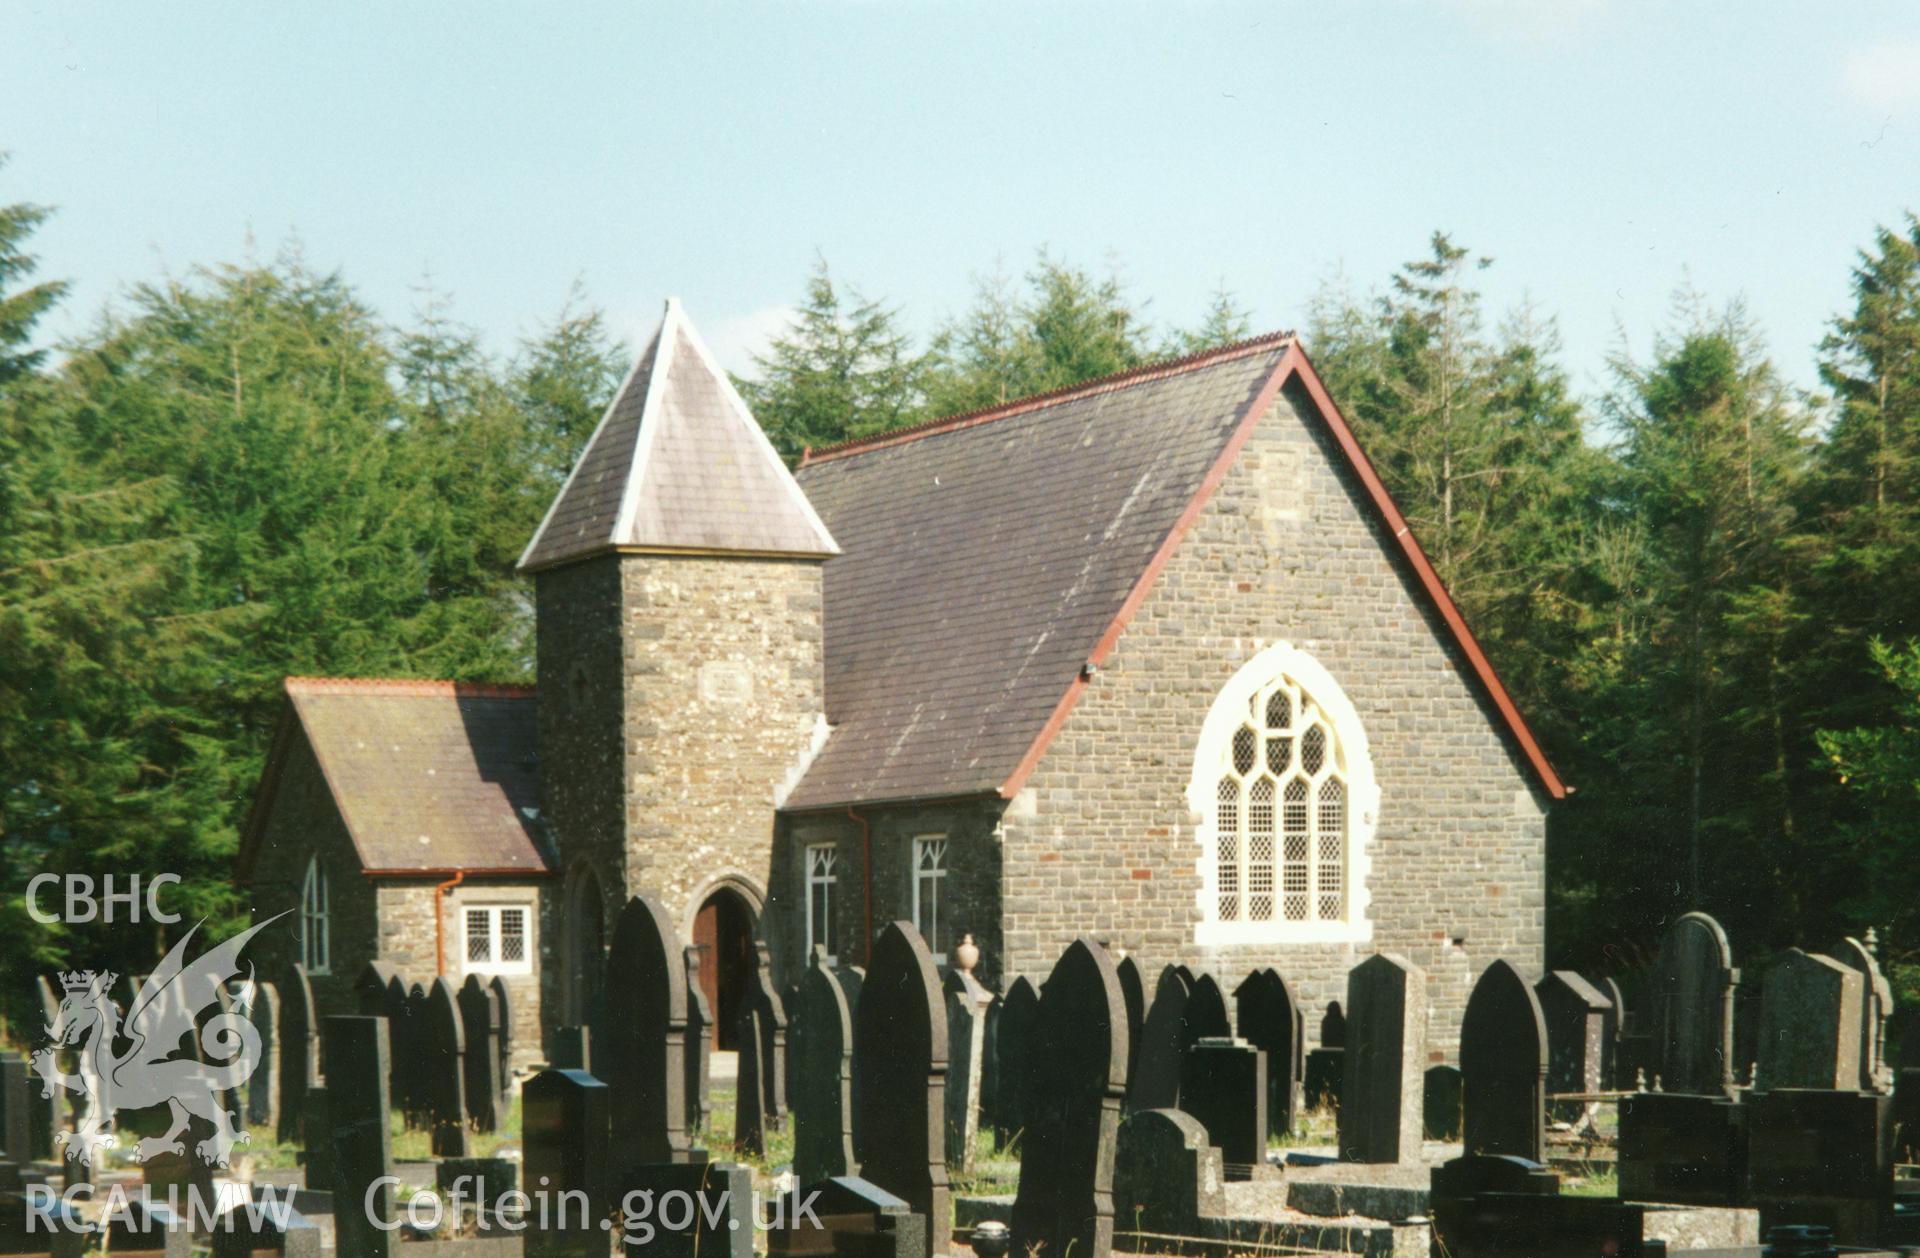 Digital copy of a colour photograph showing an exterior view of Bwlchyfadfa Unitarian Chapel, taken by Robert Scourfield, c.1996.